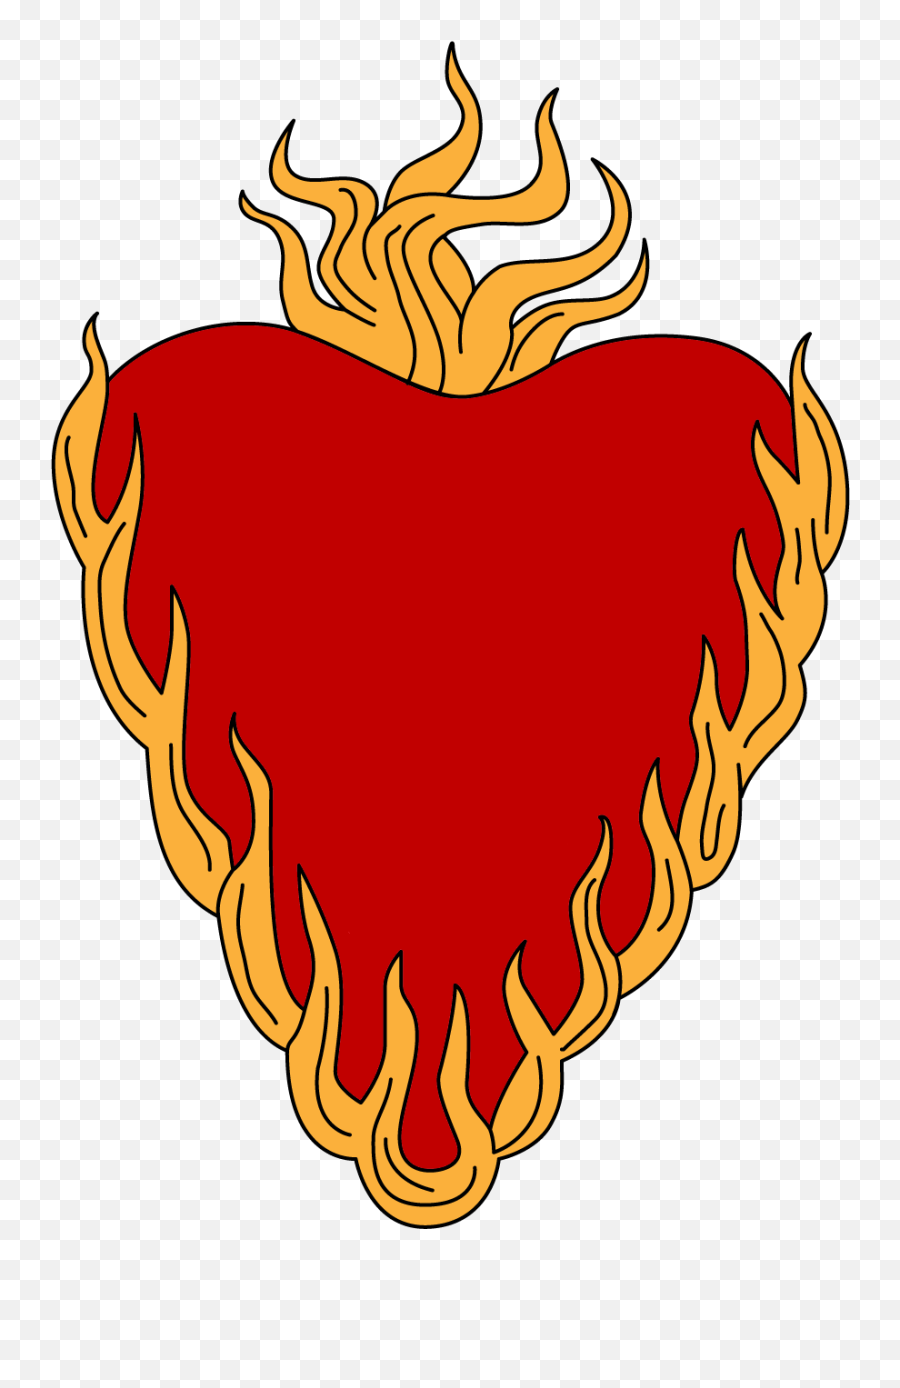 Ru0027hllor Game Of Thrones Wiki Fandom Emoji,Old Facebook Heart Emoticons